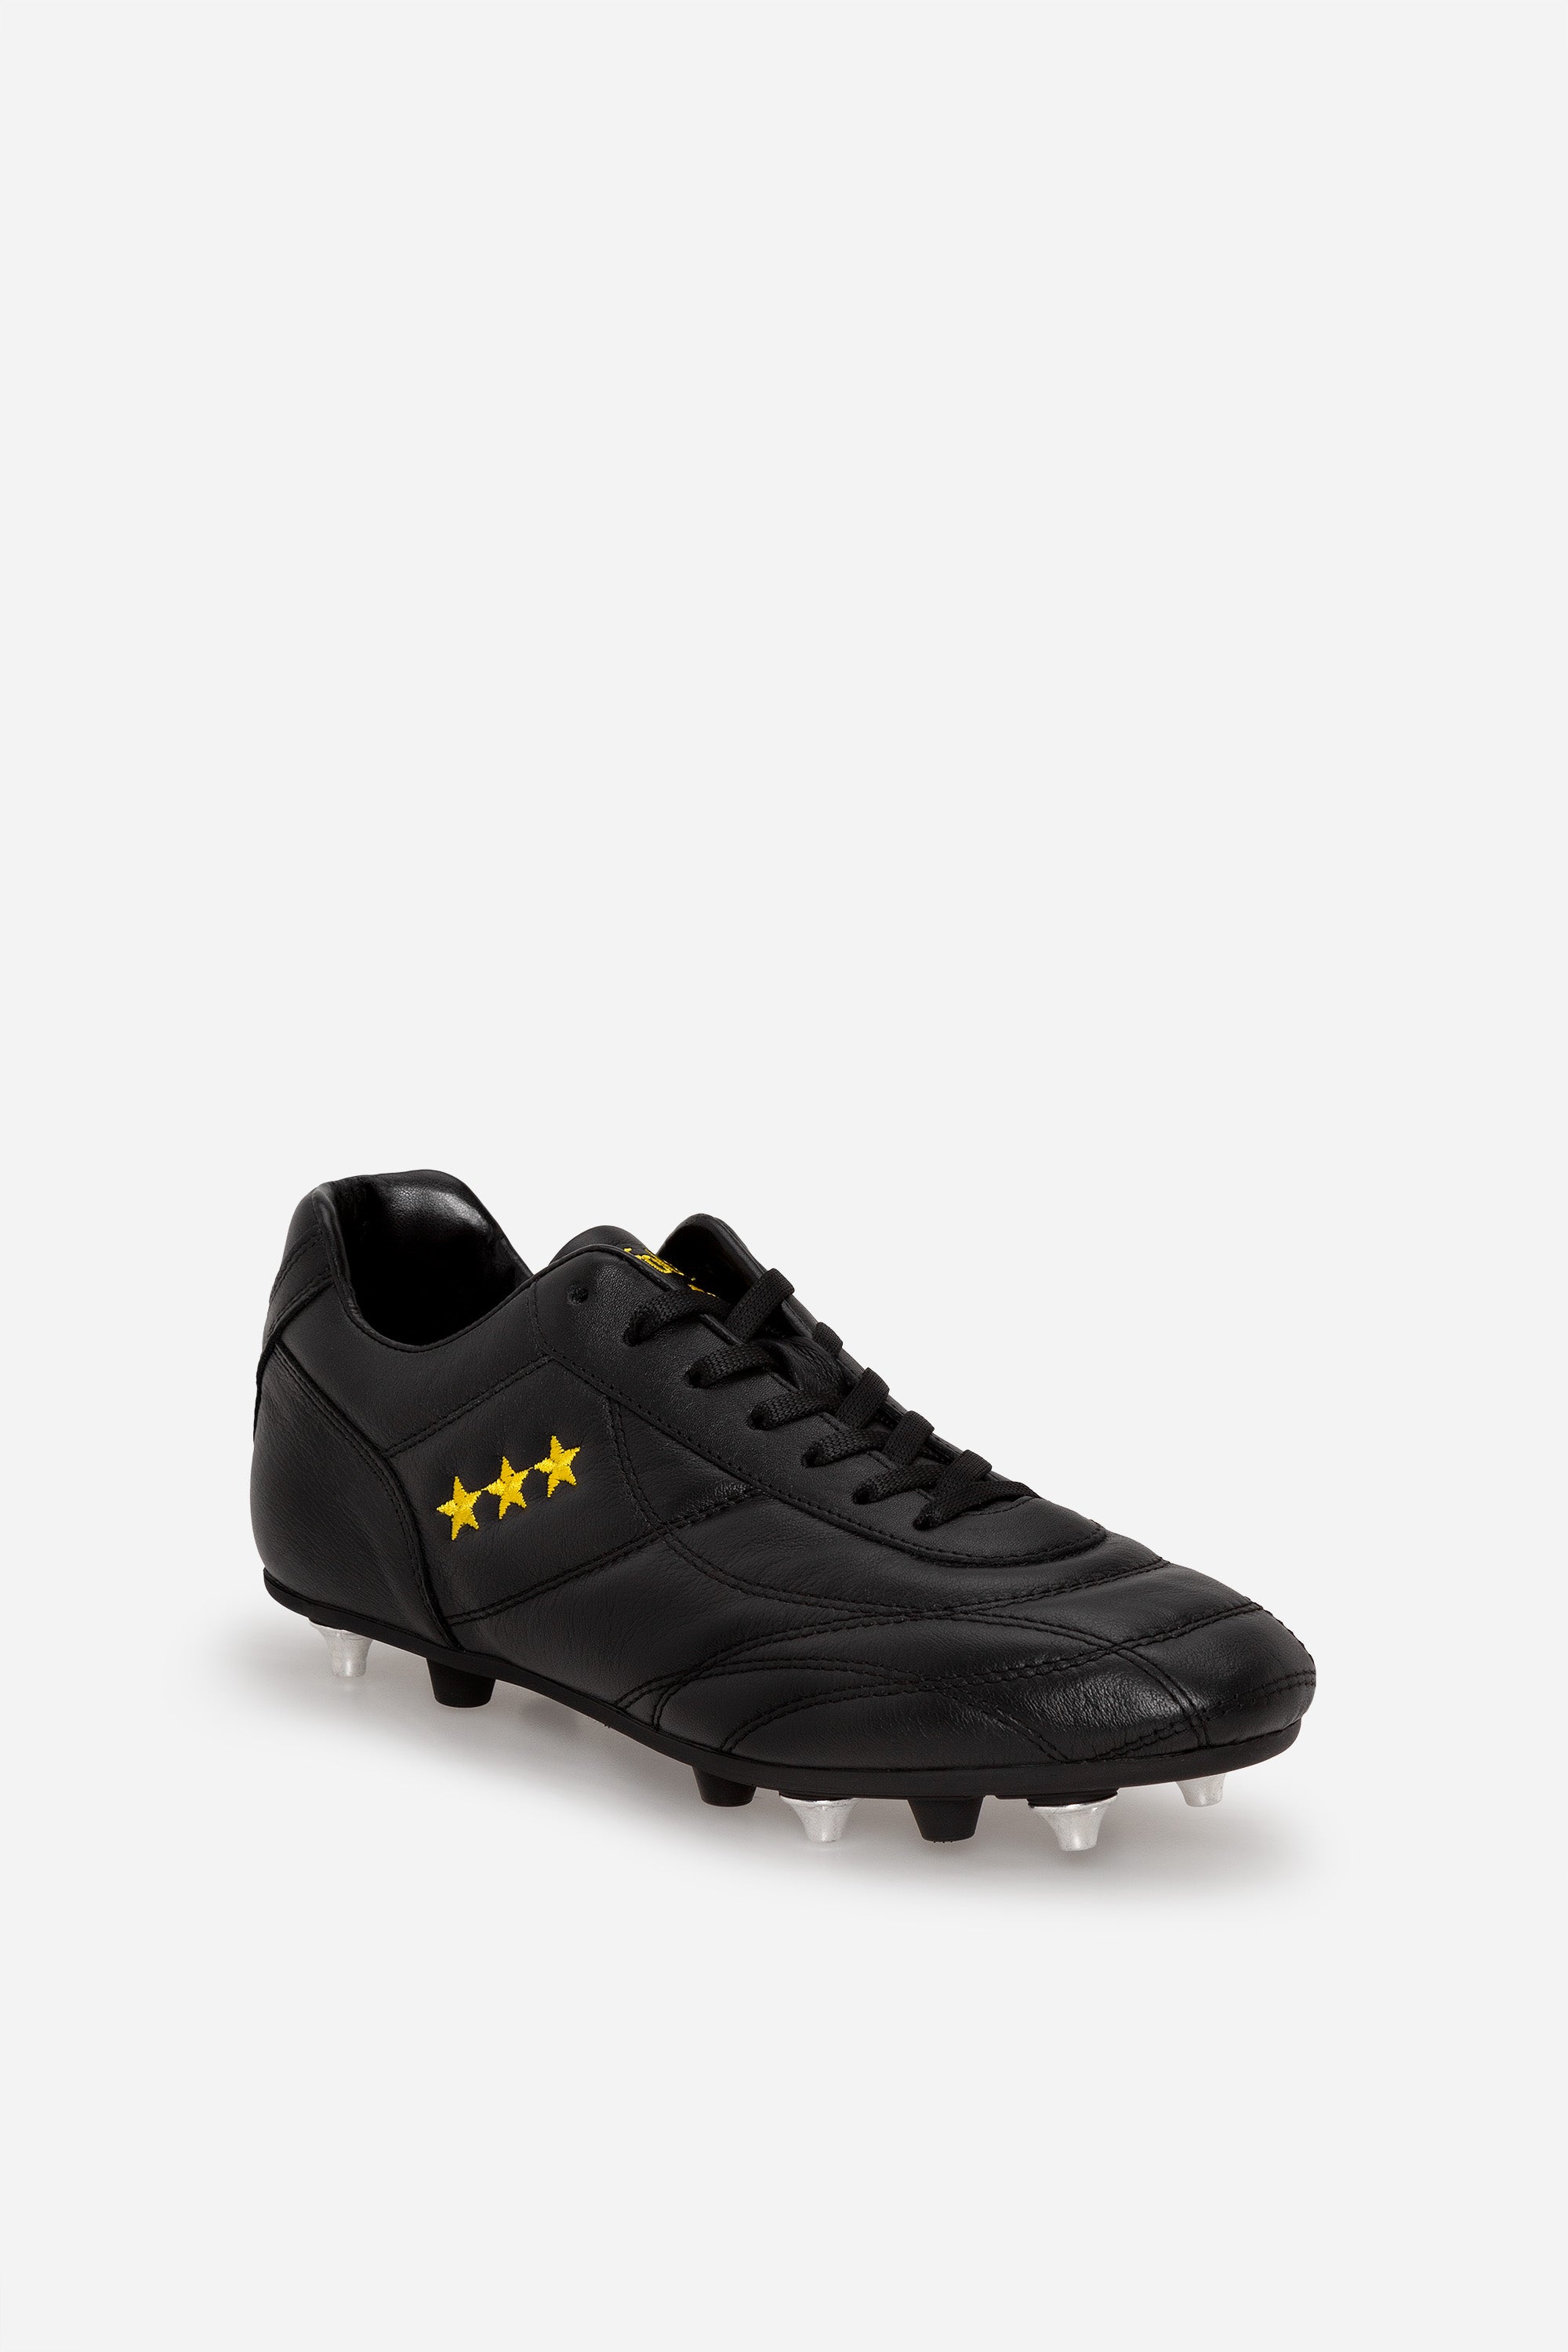 Pantofola d'Oro Epoca Leather Football Boot